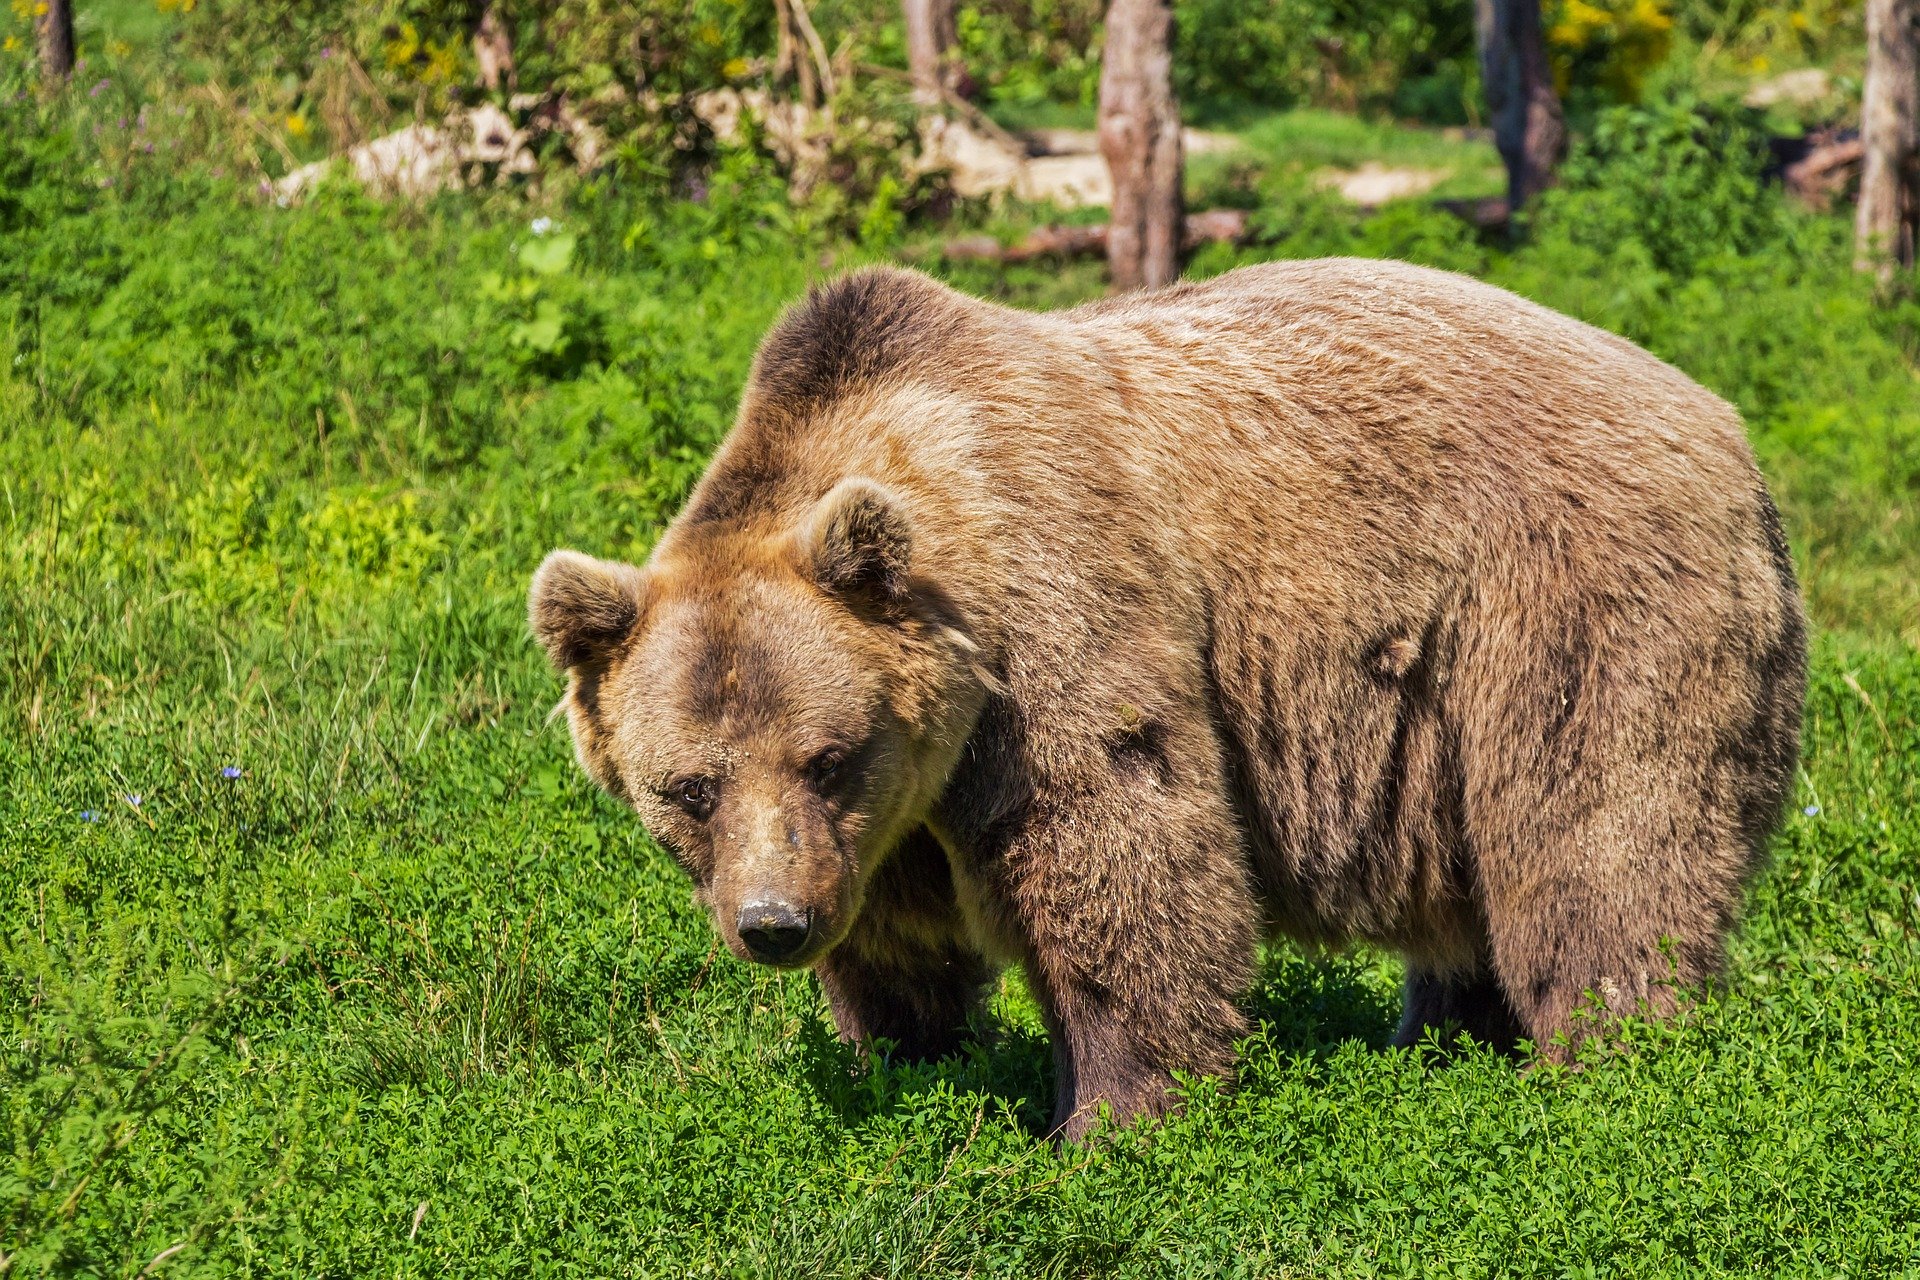 Grizzly bear | Source: Pixabay 